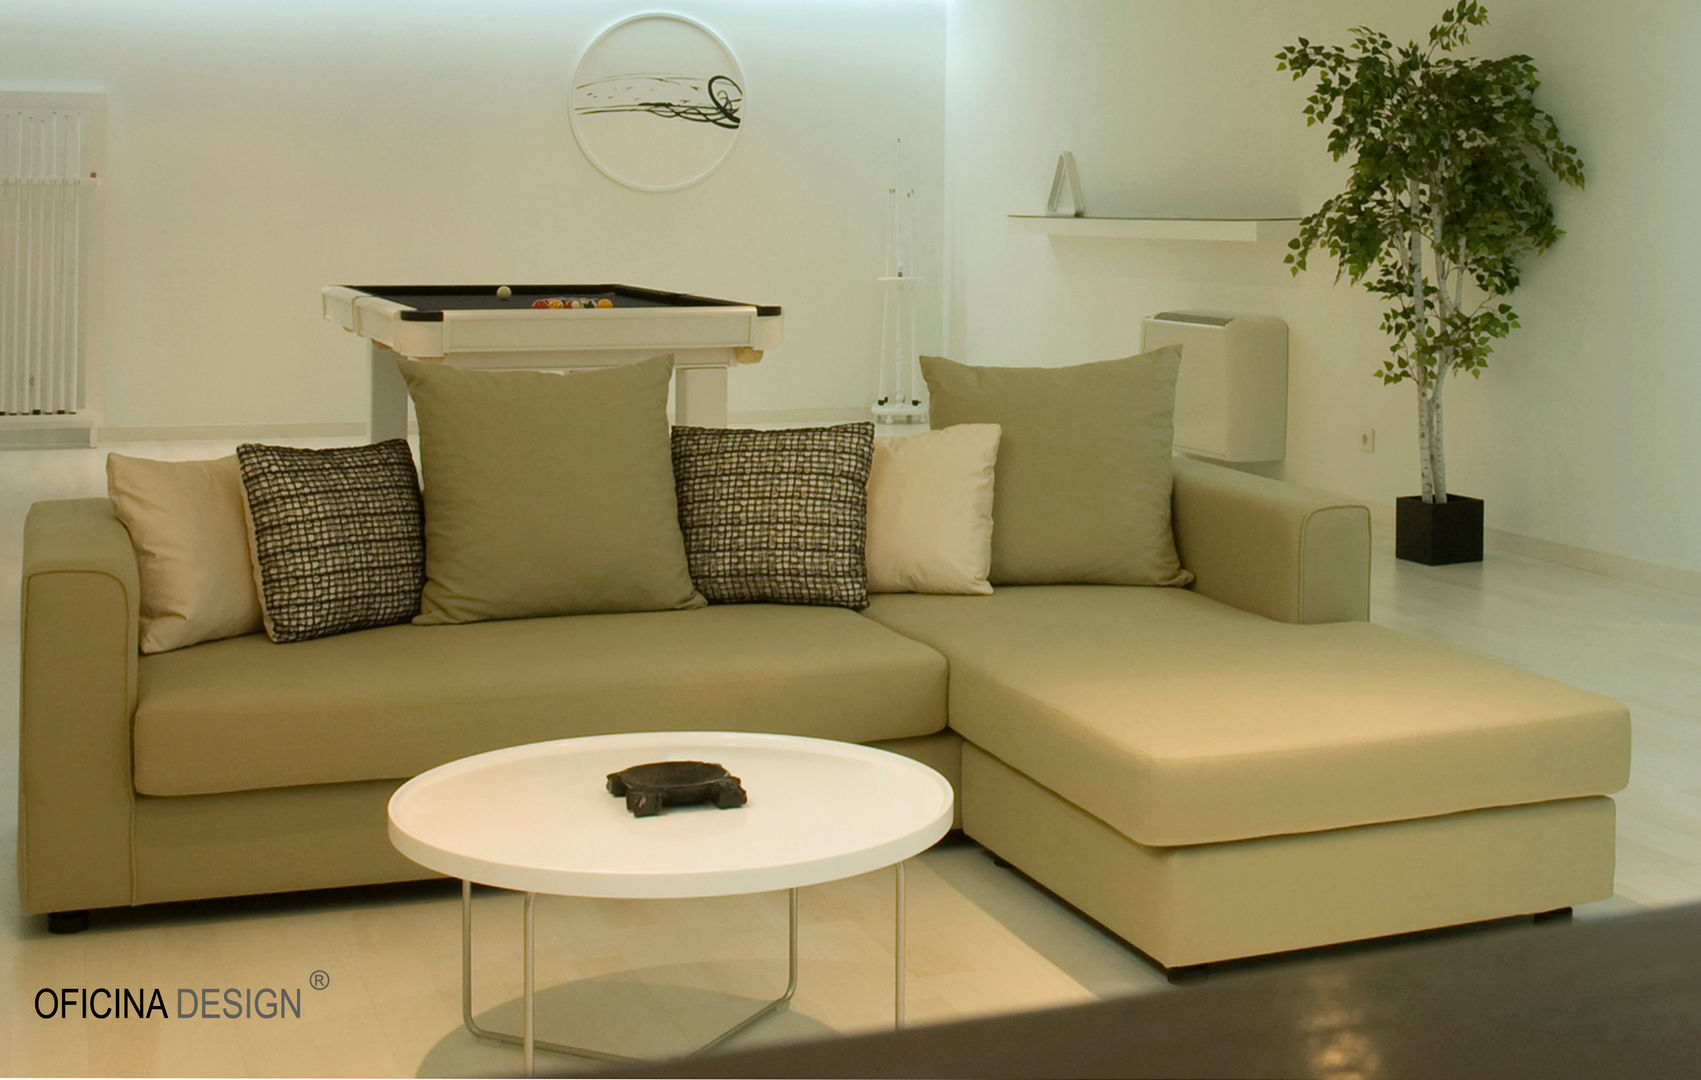 Casa - Freedom, Oficina Design Oficina Design Livings de estilo minimalista